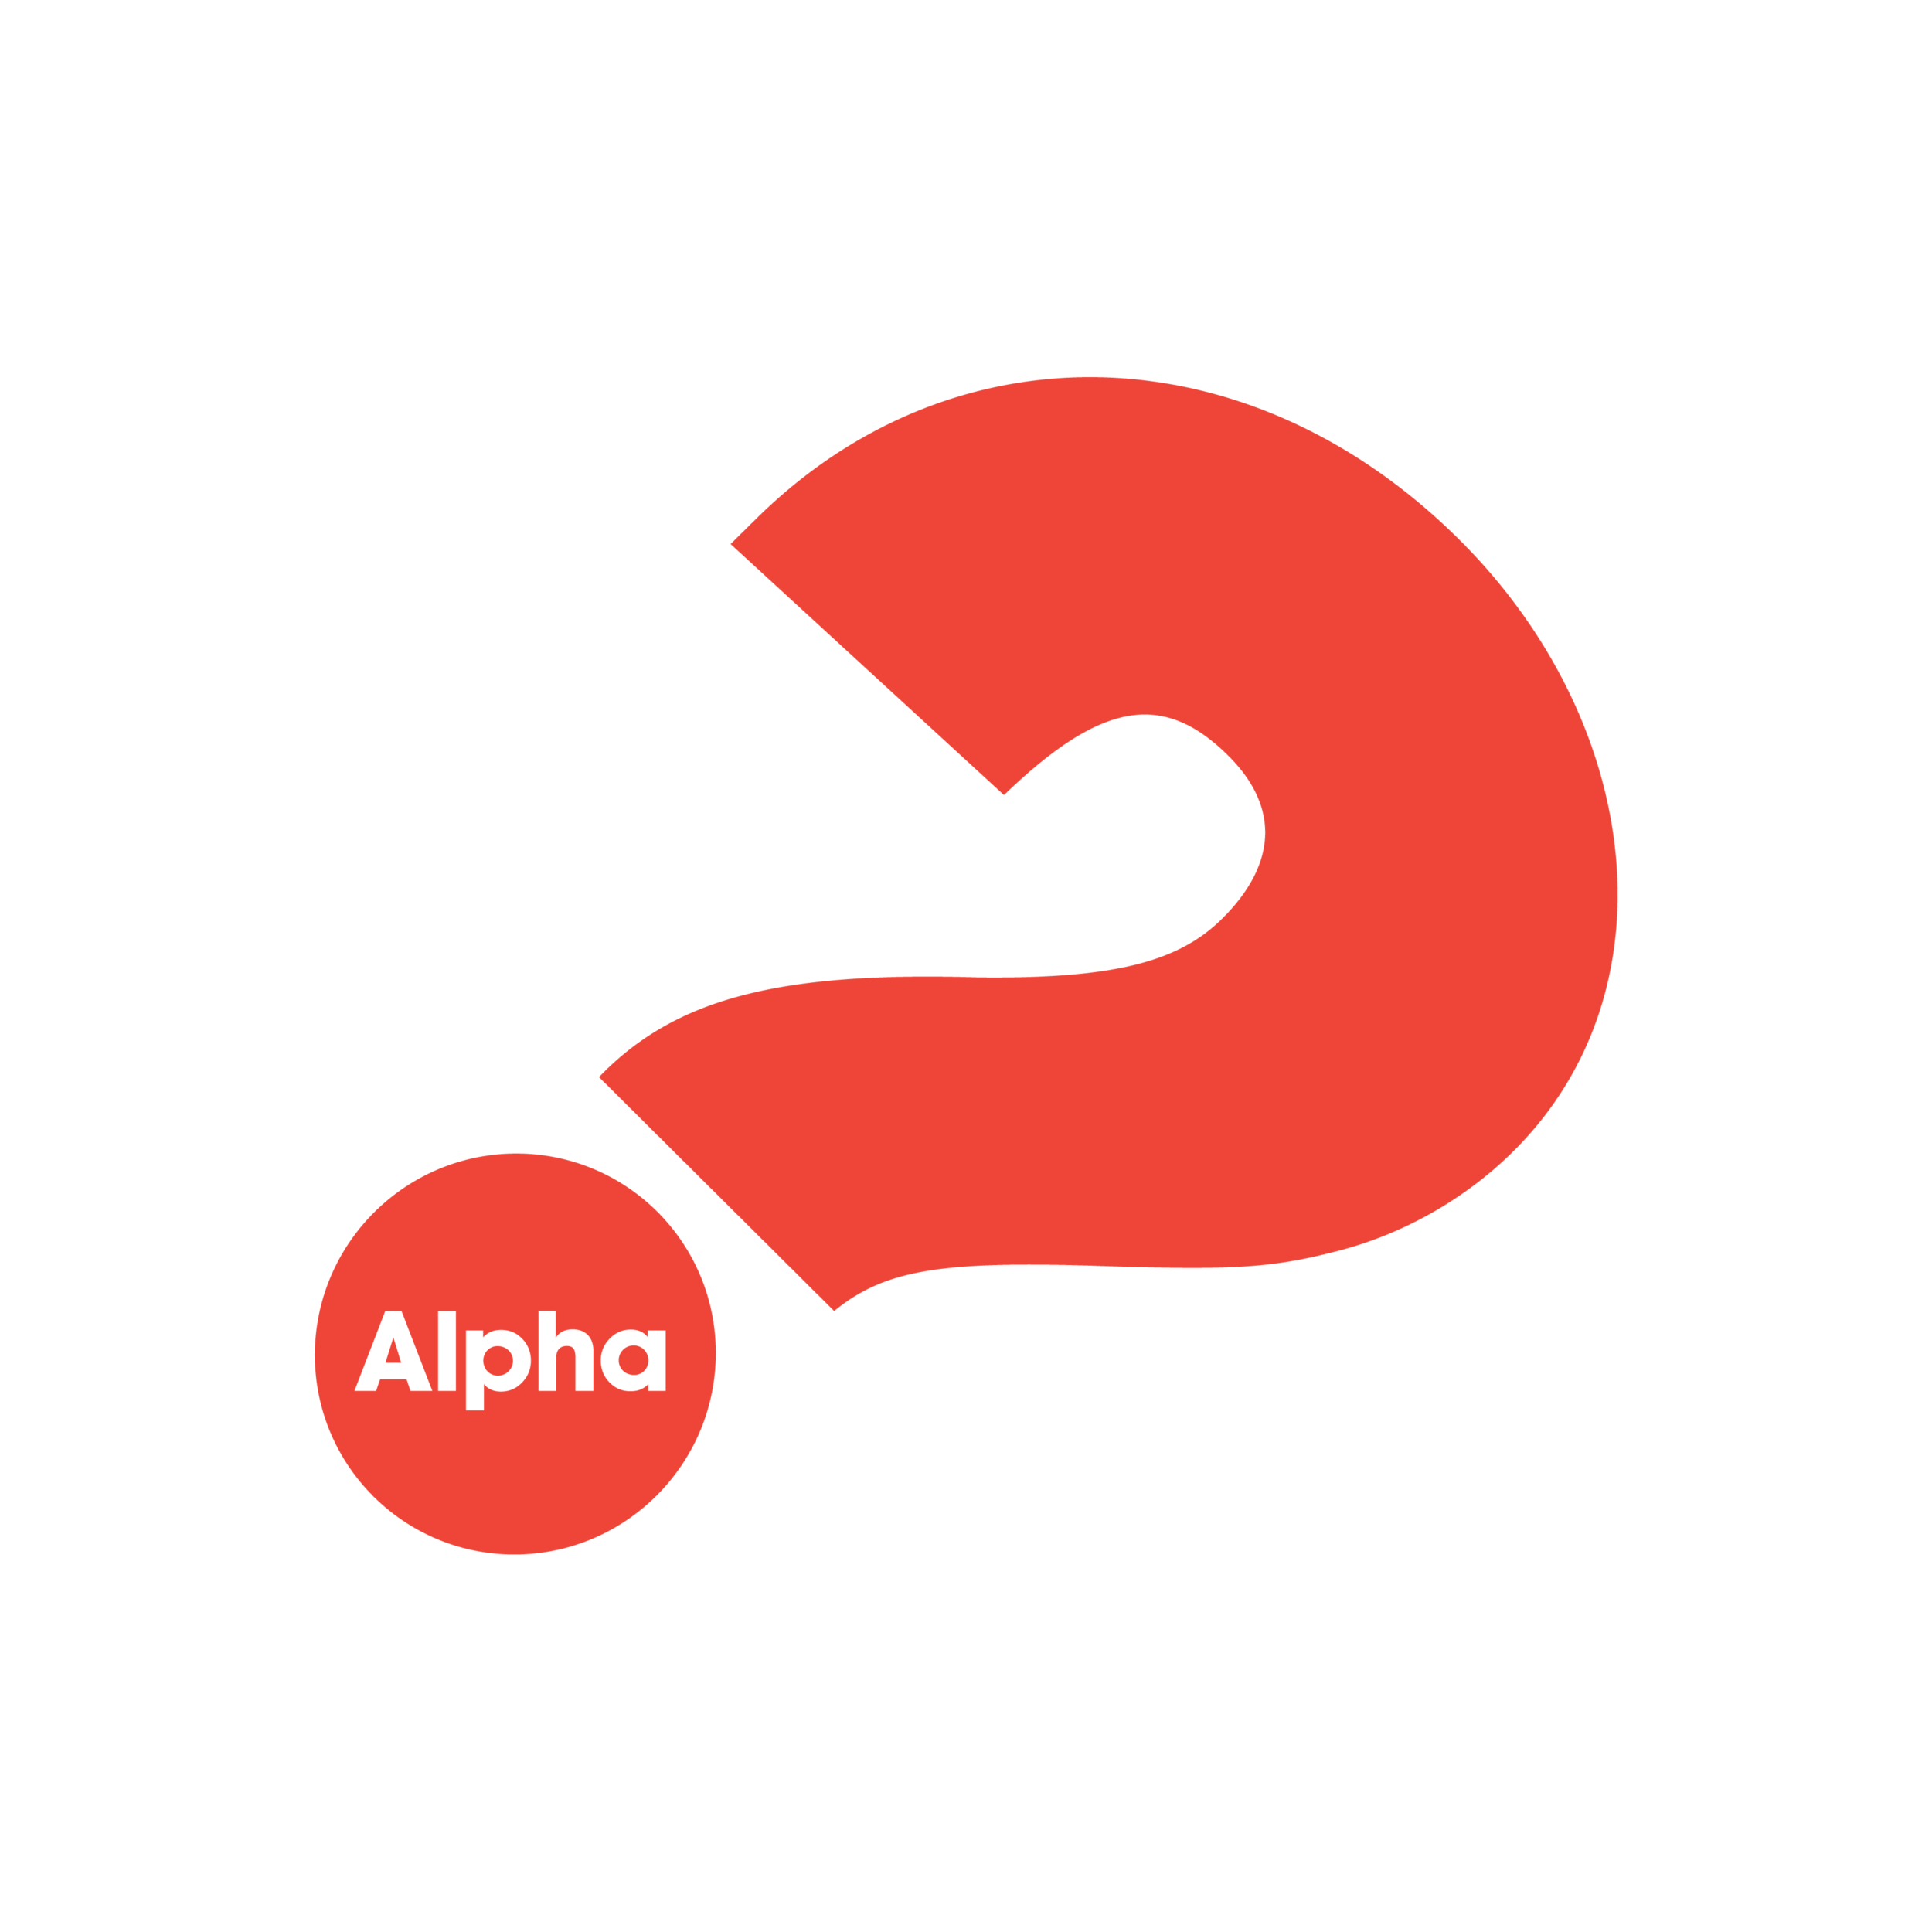 Why Alpha?